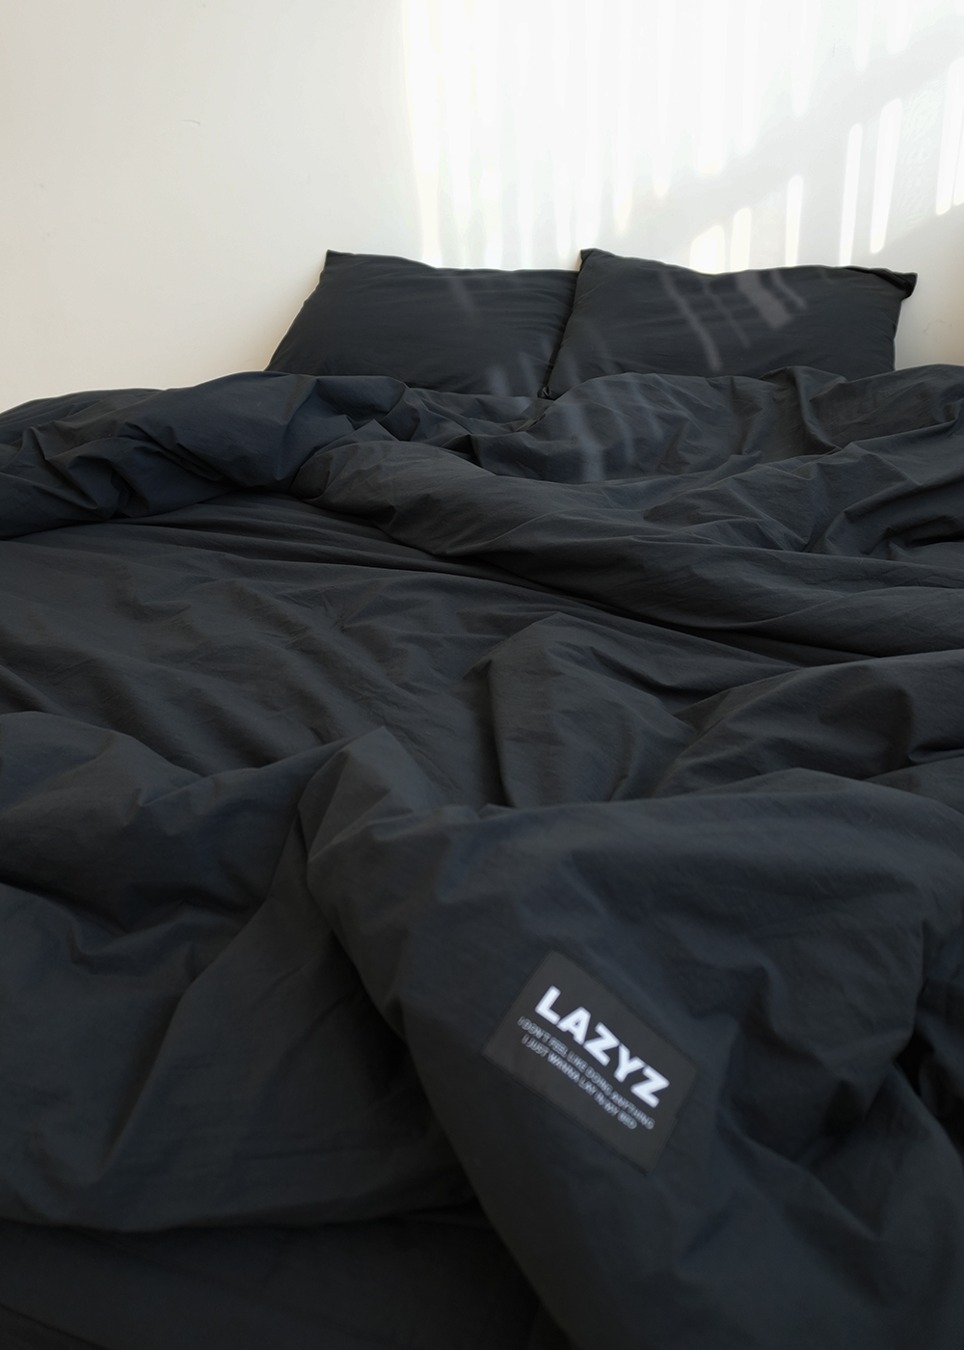 Lazyz Classic Home Comforter - All Black